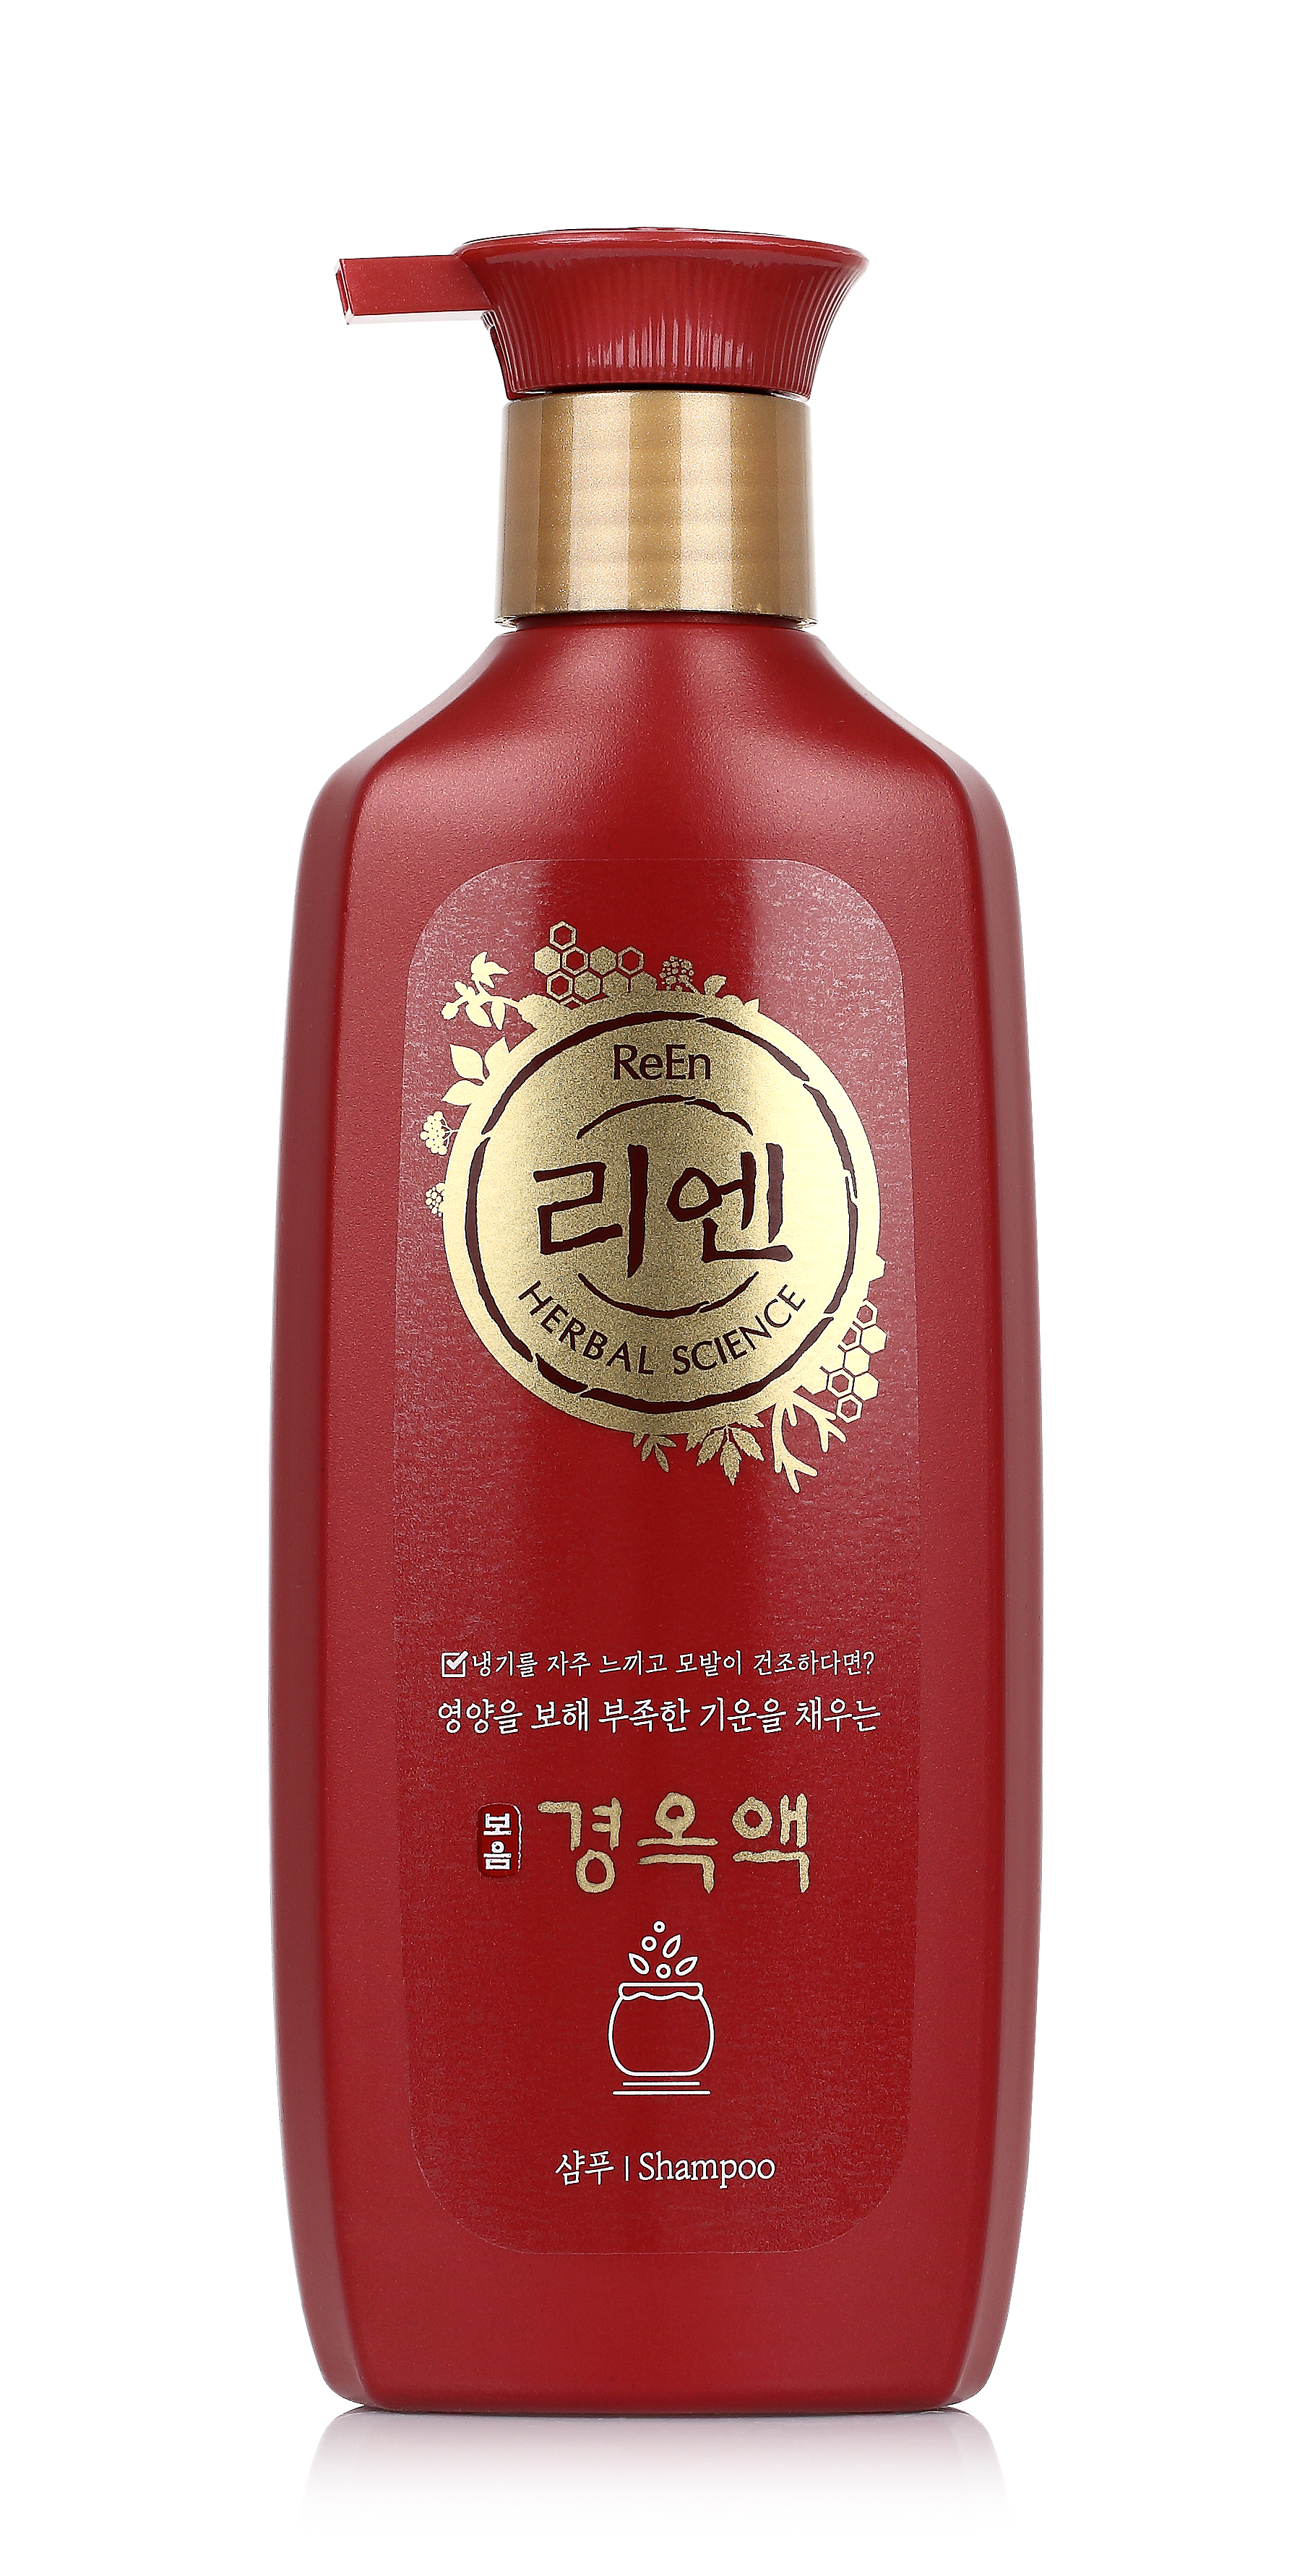 LG H&H ReEn Kyungok Шампунь для волос 500 мл 